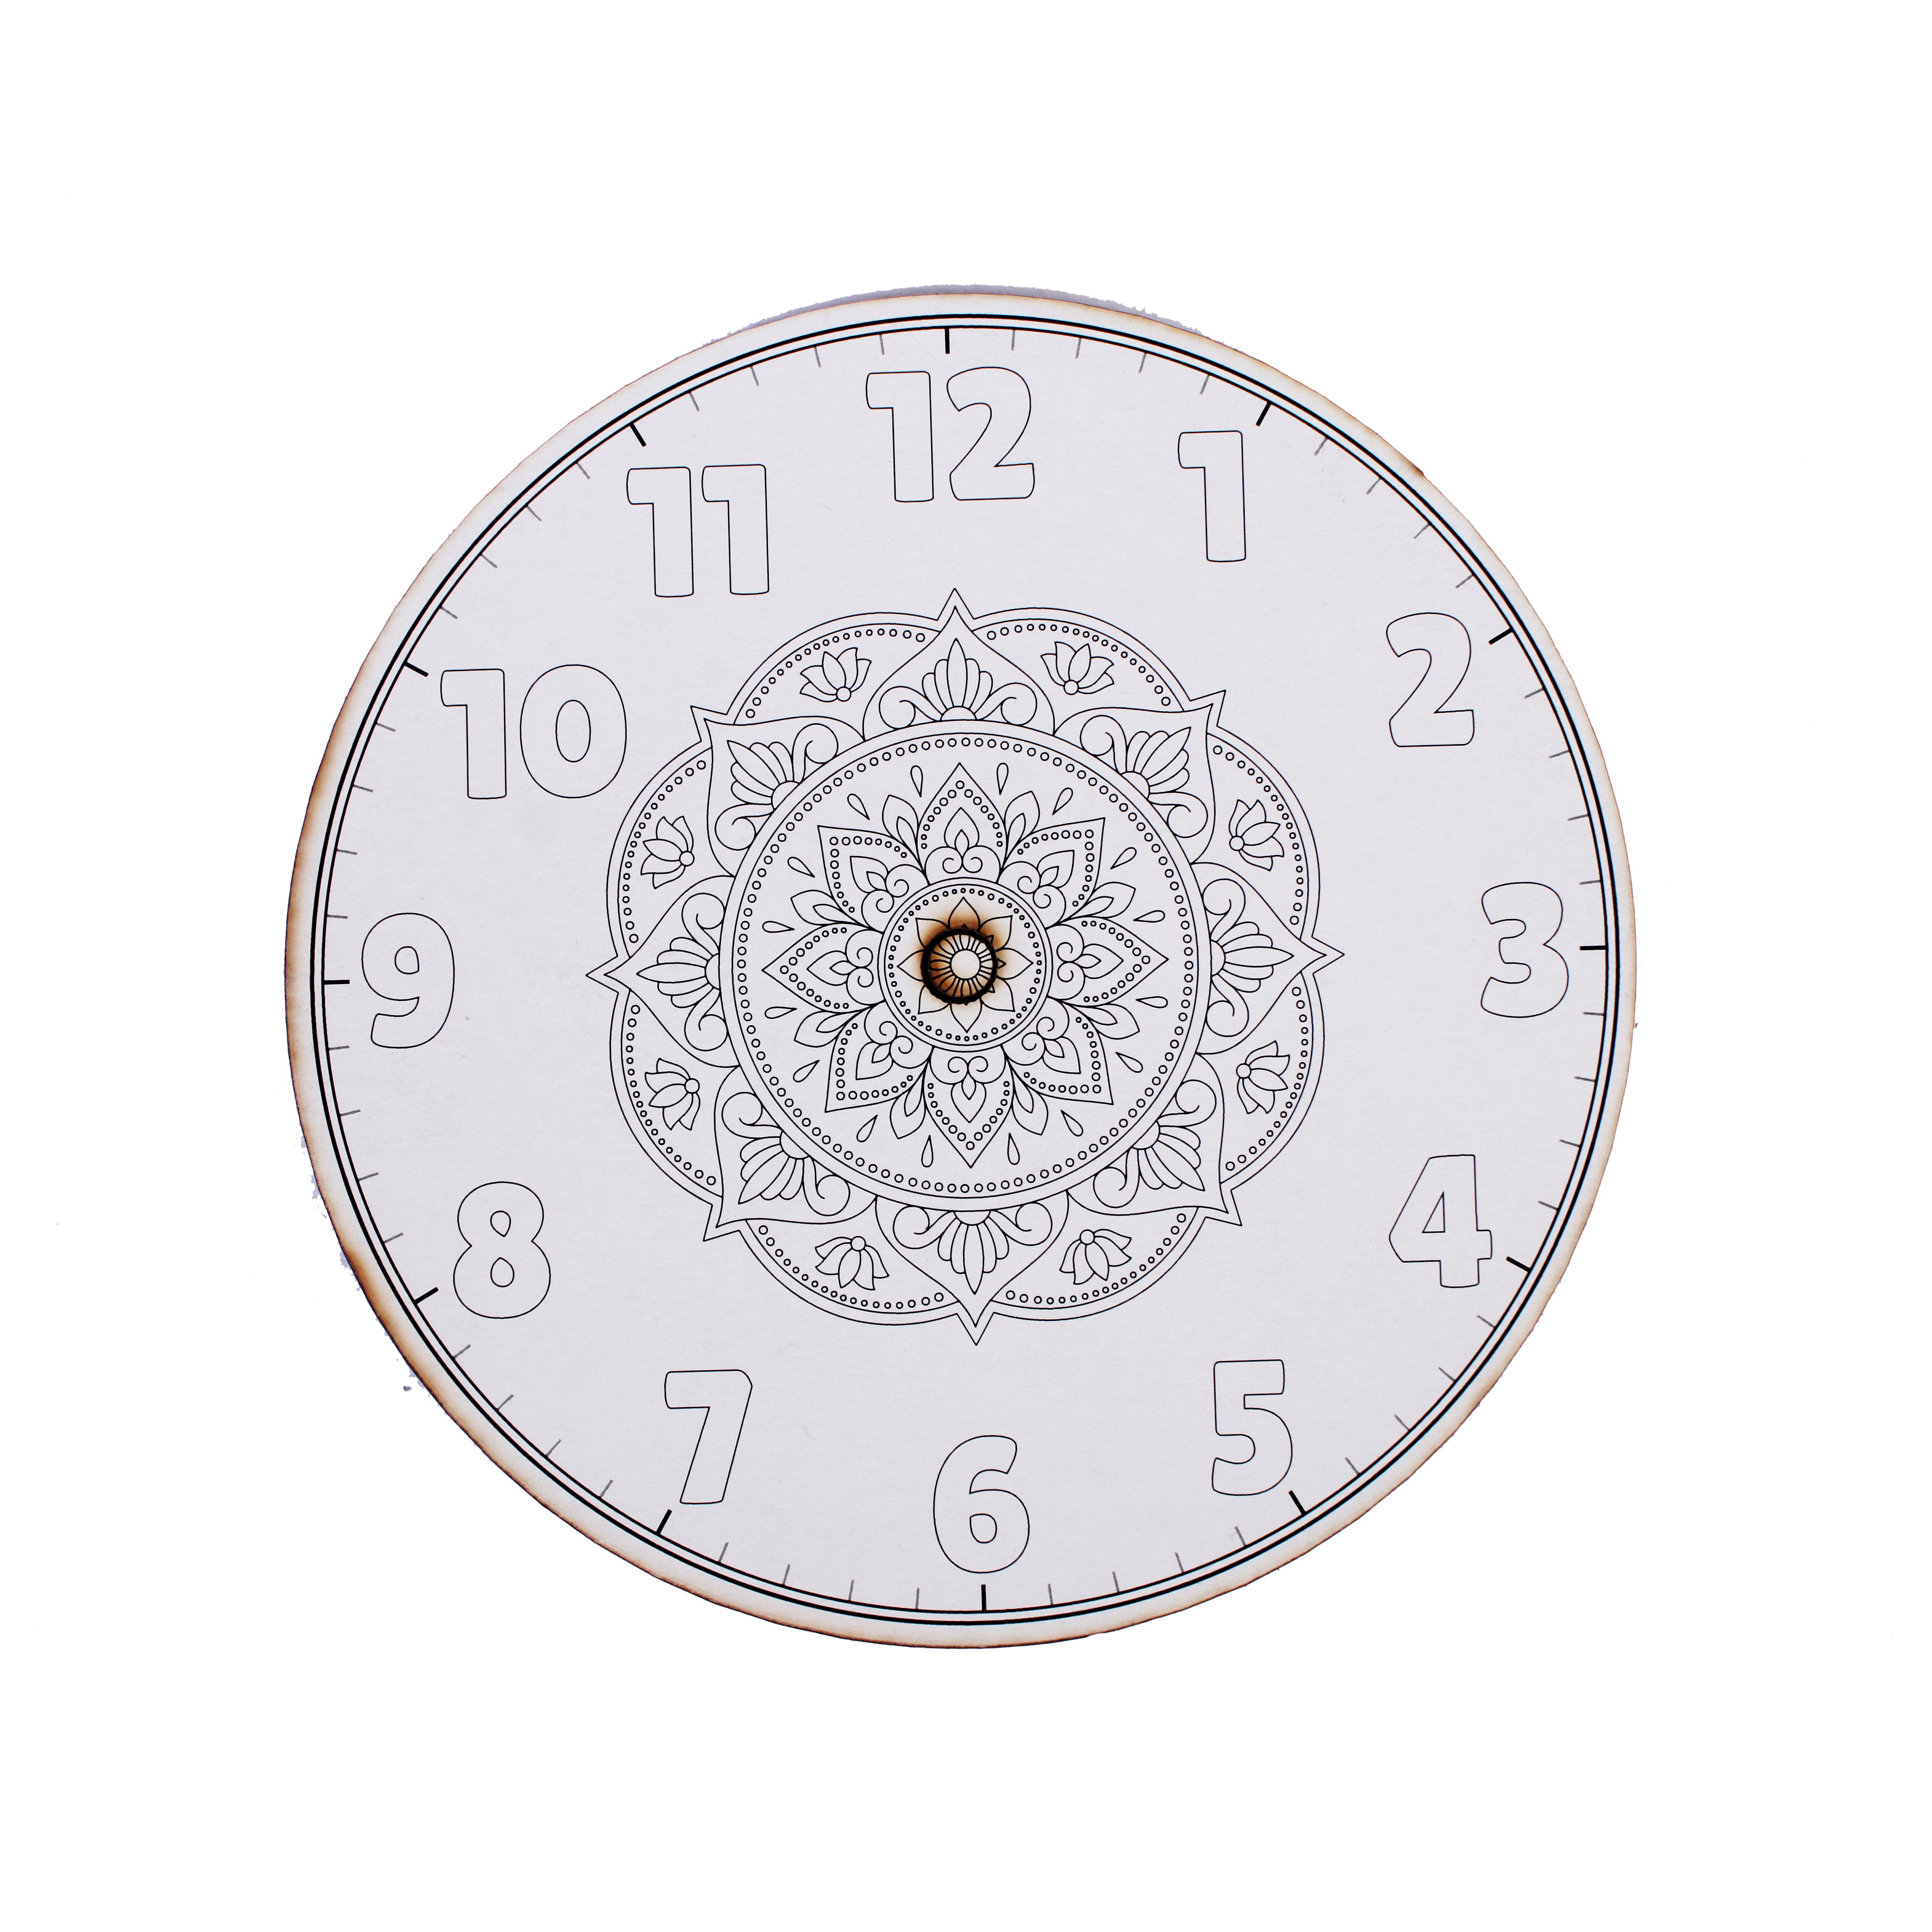 Clock Making Diy Kit Paint And Make A Mandala 1Pack Pbci Lb